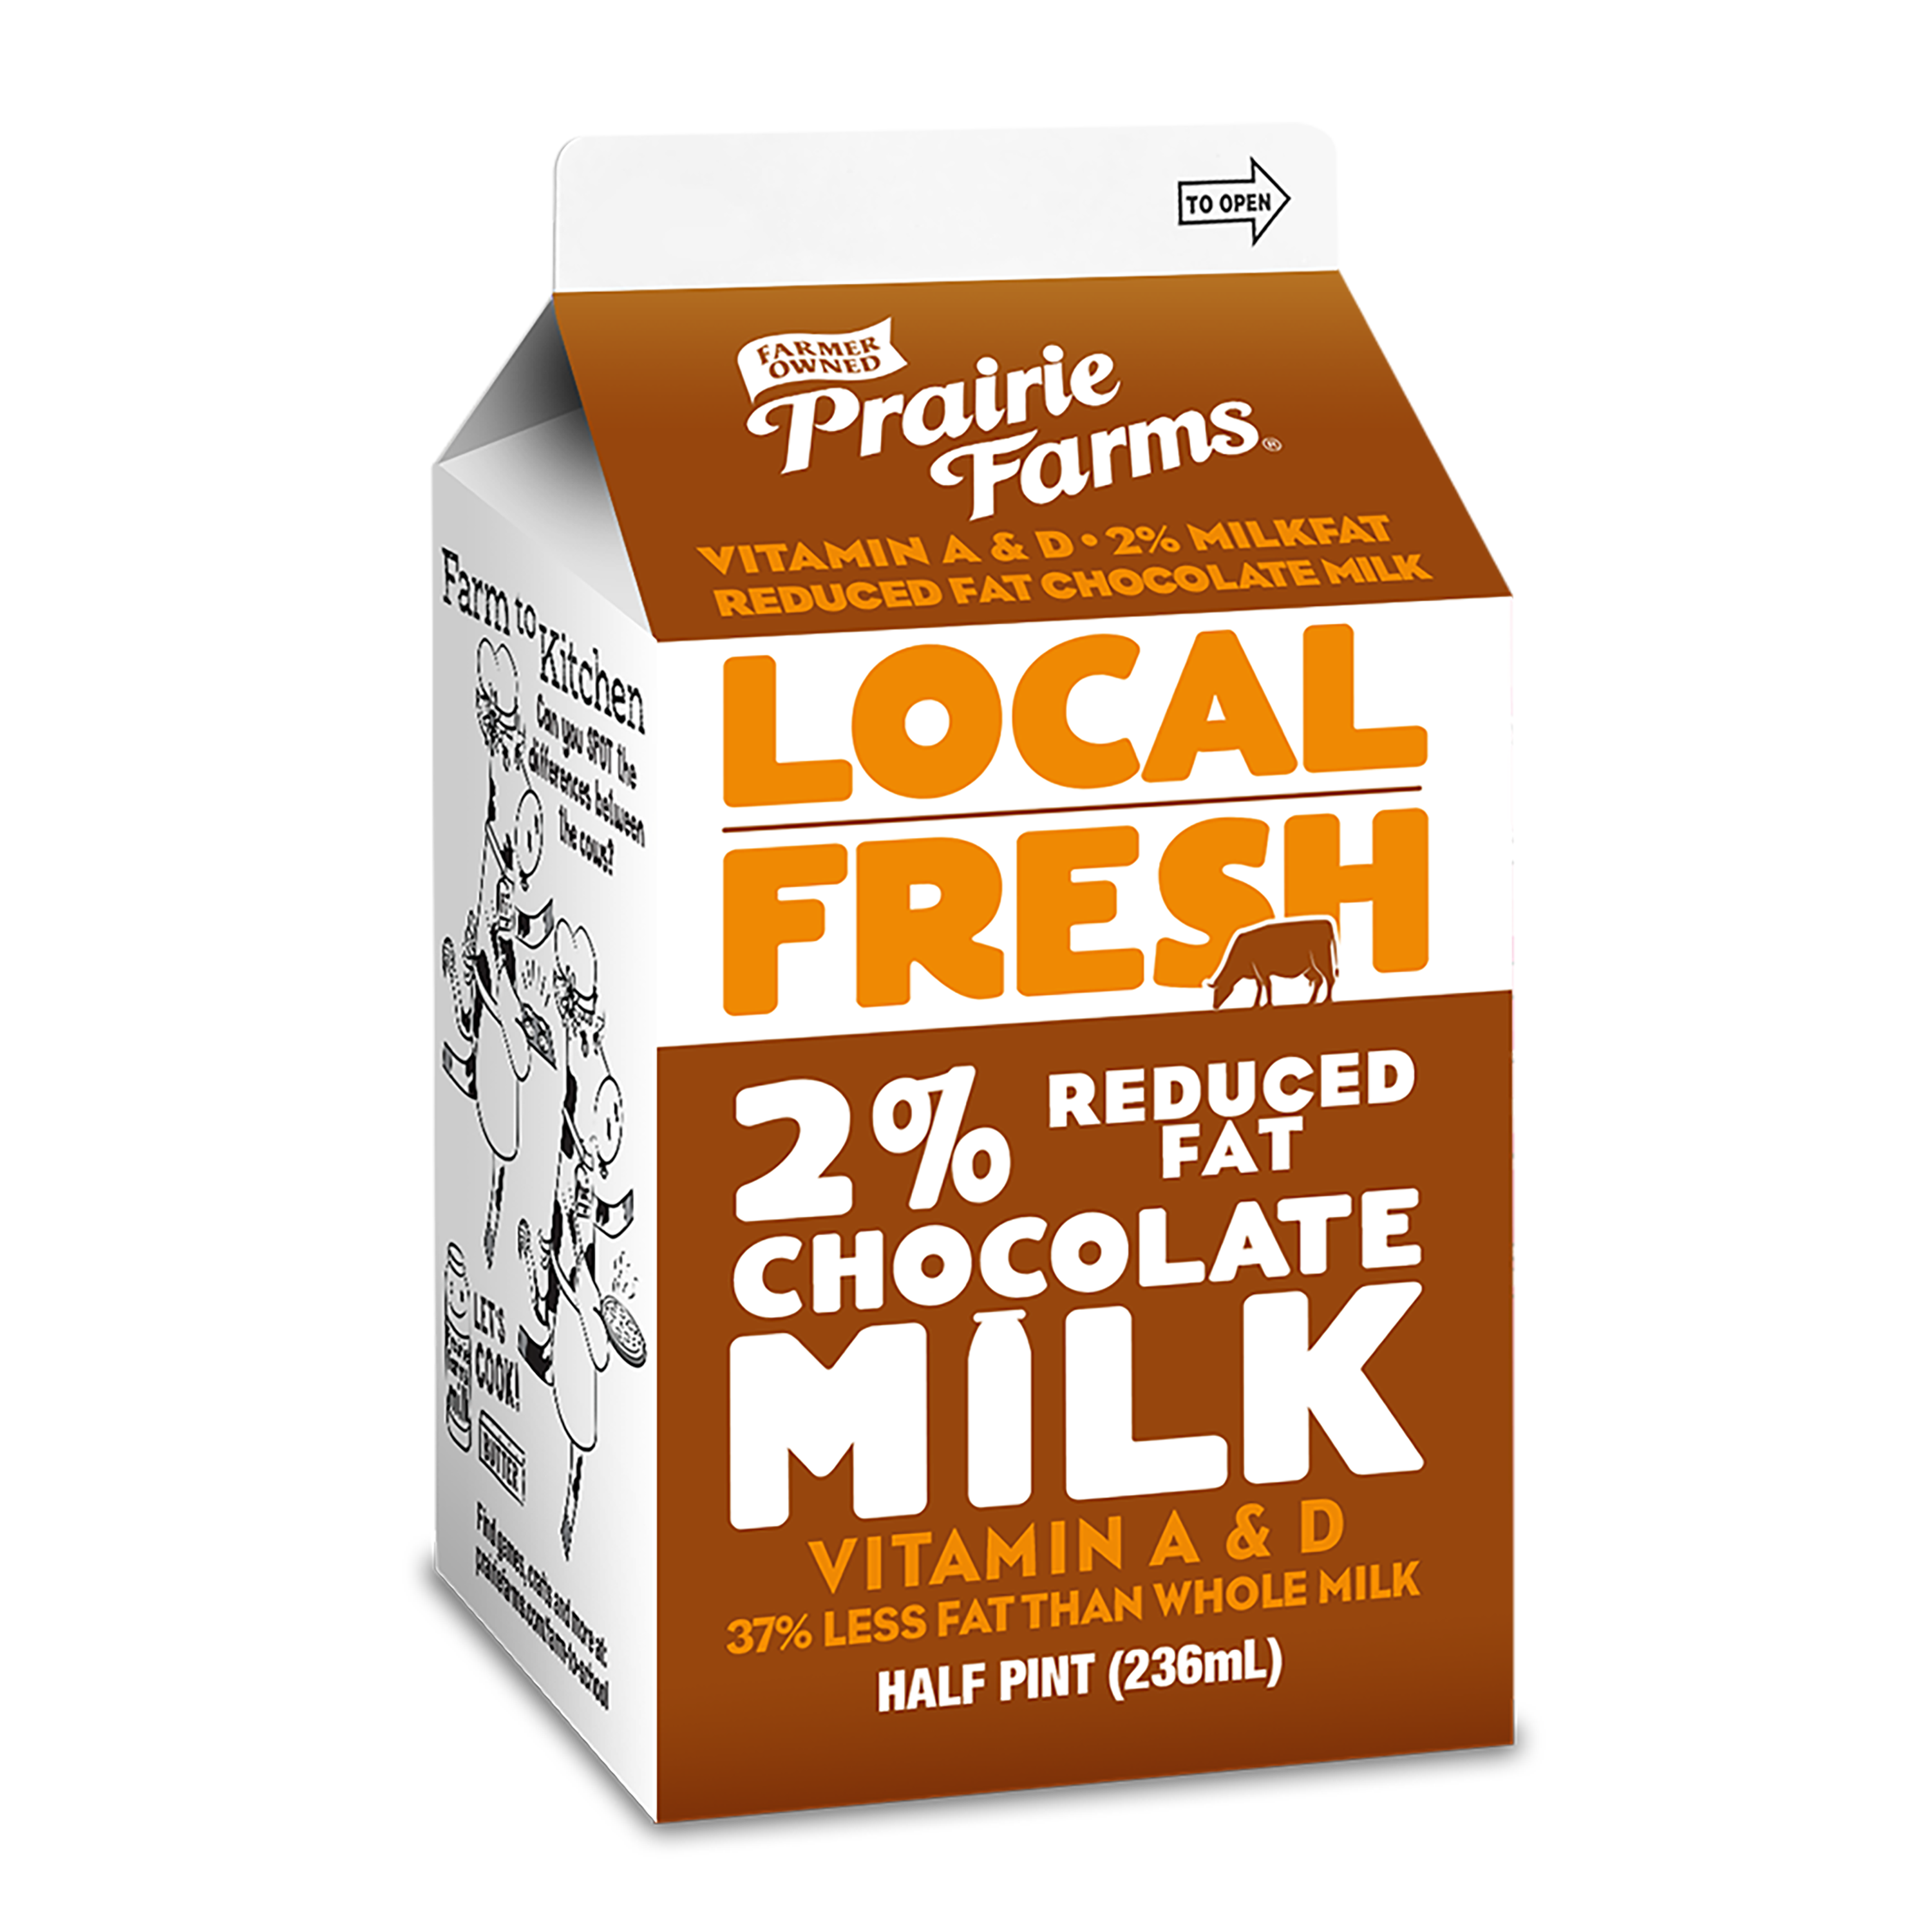 open chocolate milk carton